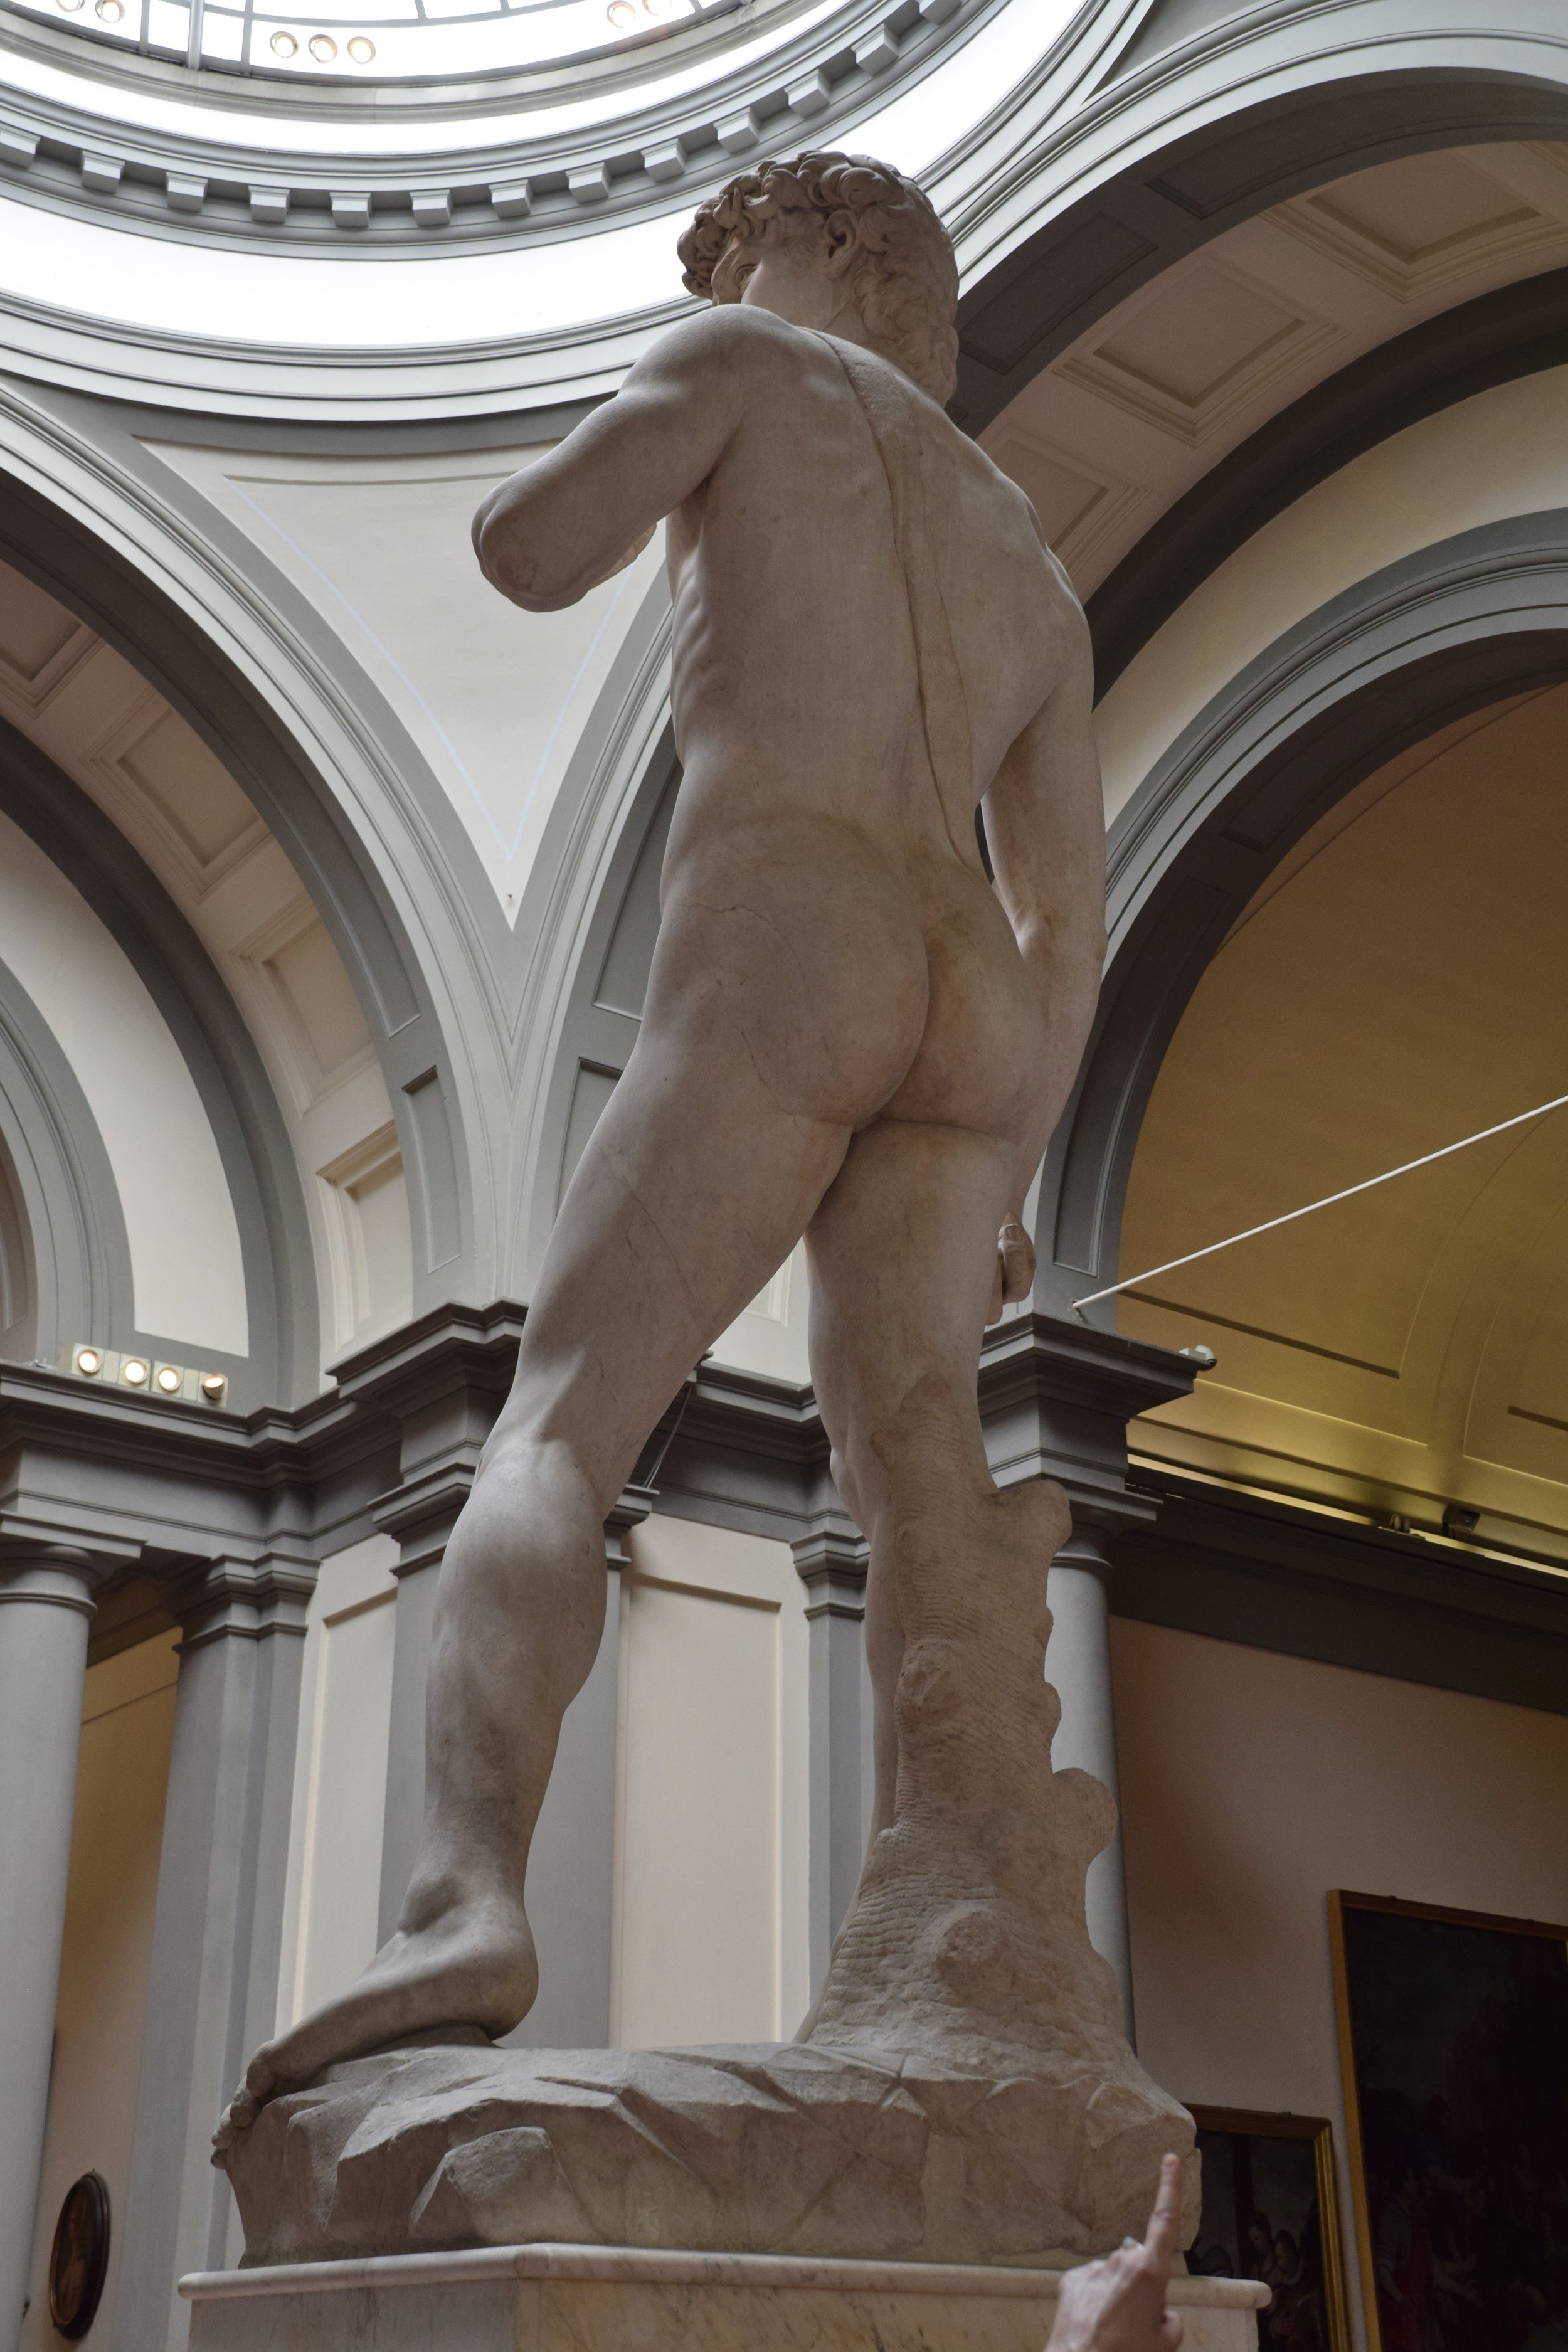 Galleria_dell'Accademia_Michelangelo’s_David,_Florence_2019_-_48170232147.jpg